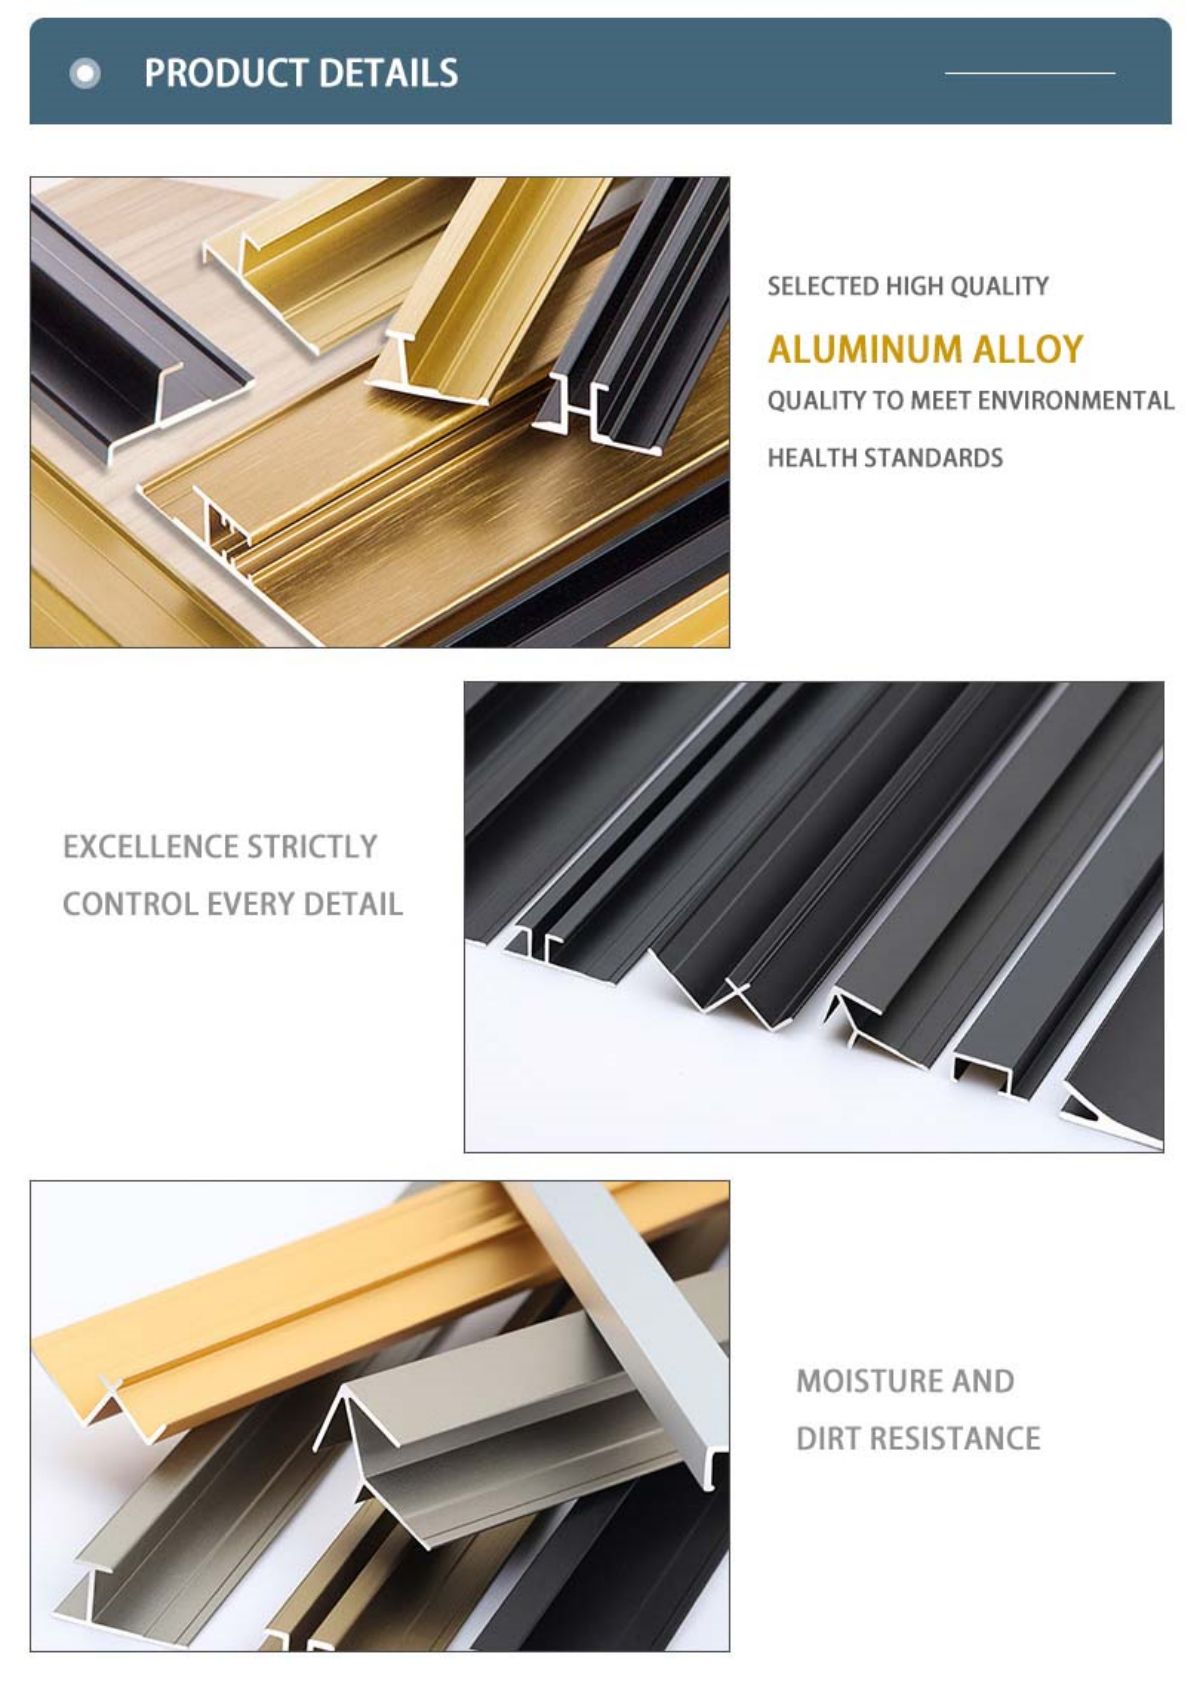 https://www.fsdcbm.com/new-arrival-aluminum-wall-corner-edging-trim-product/